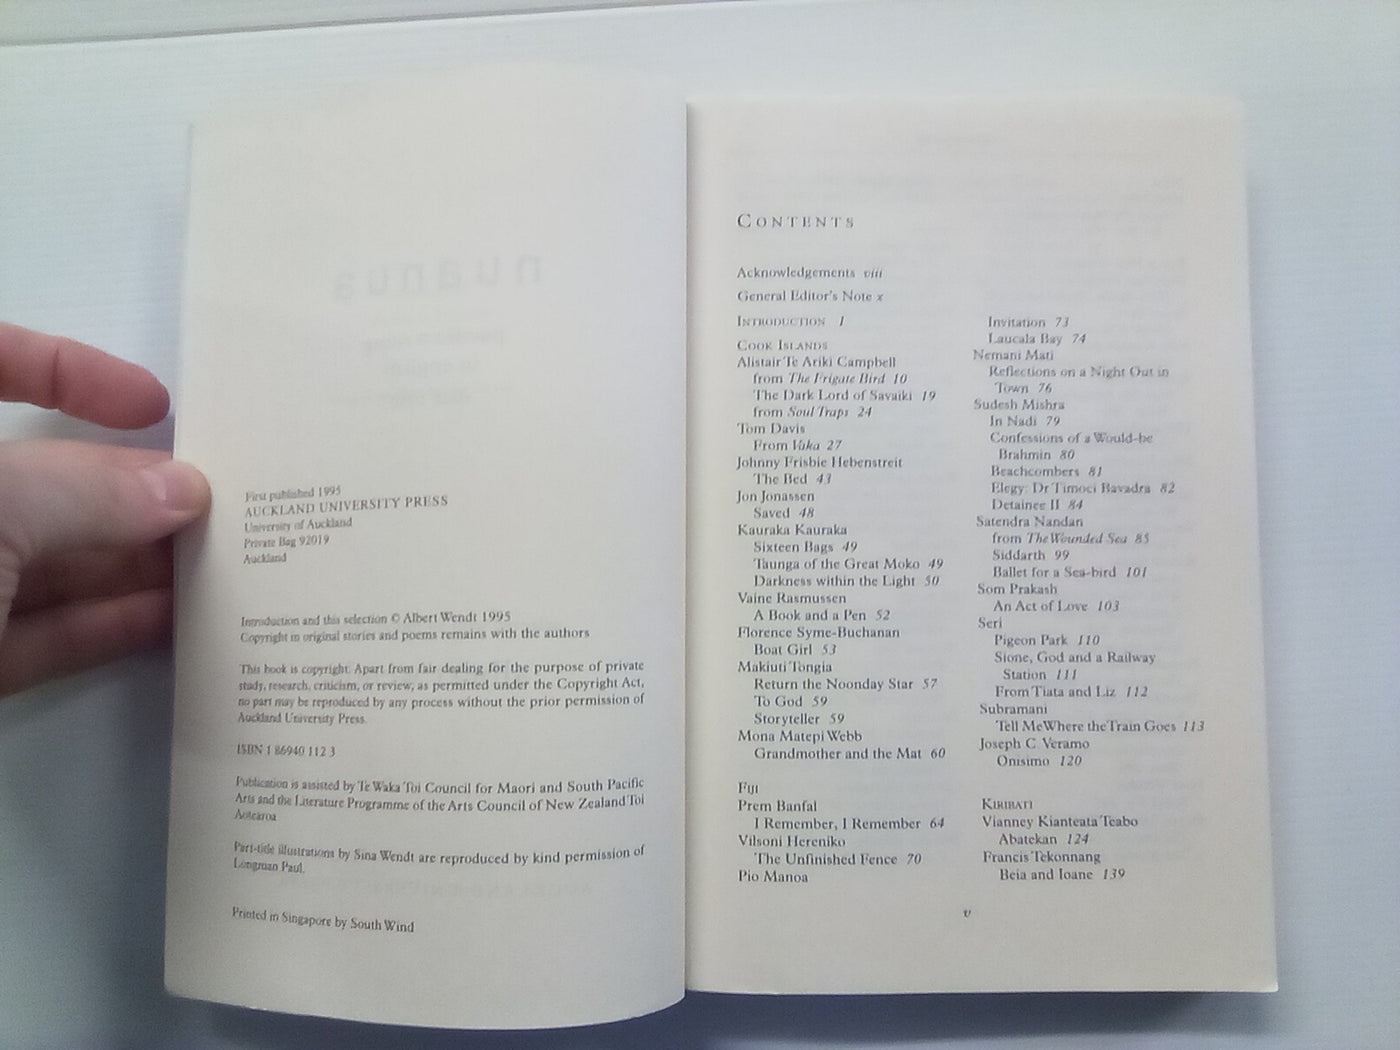 Nuanua - Pacific Writing in English since 1980 (Akld University Press)